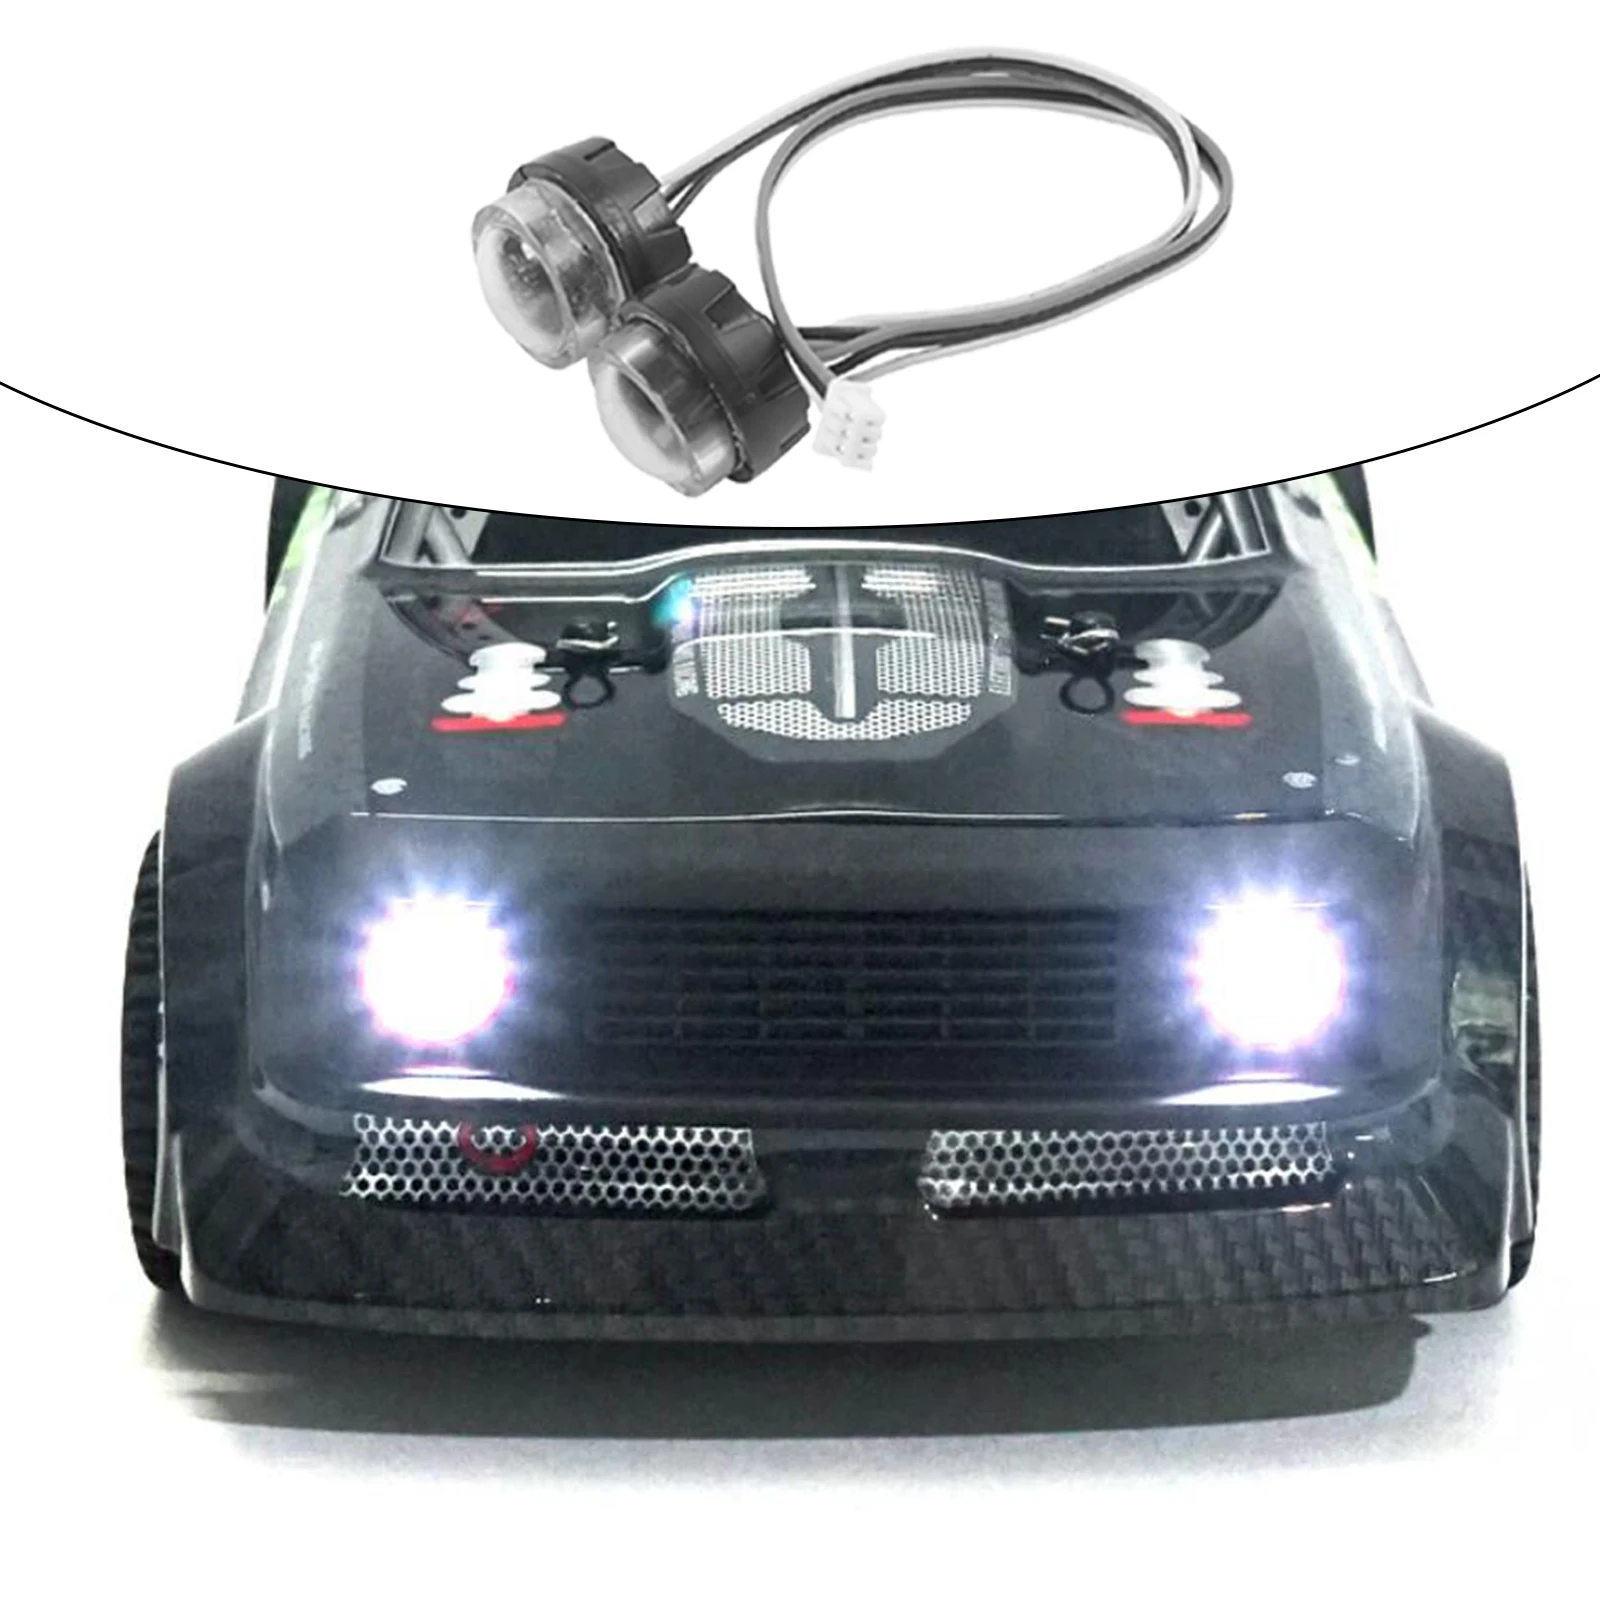 Front LED Light Headlight Spotlight Replacement for SG-1603 1:16  Car